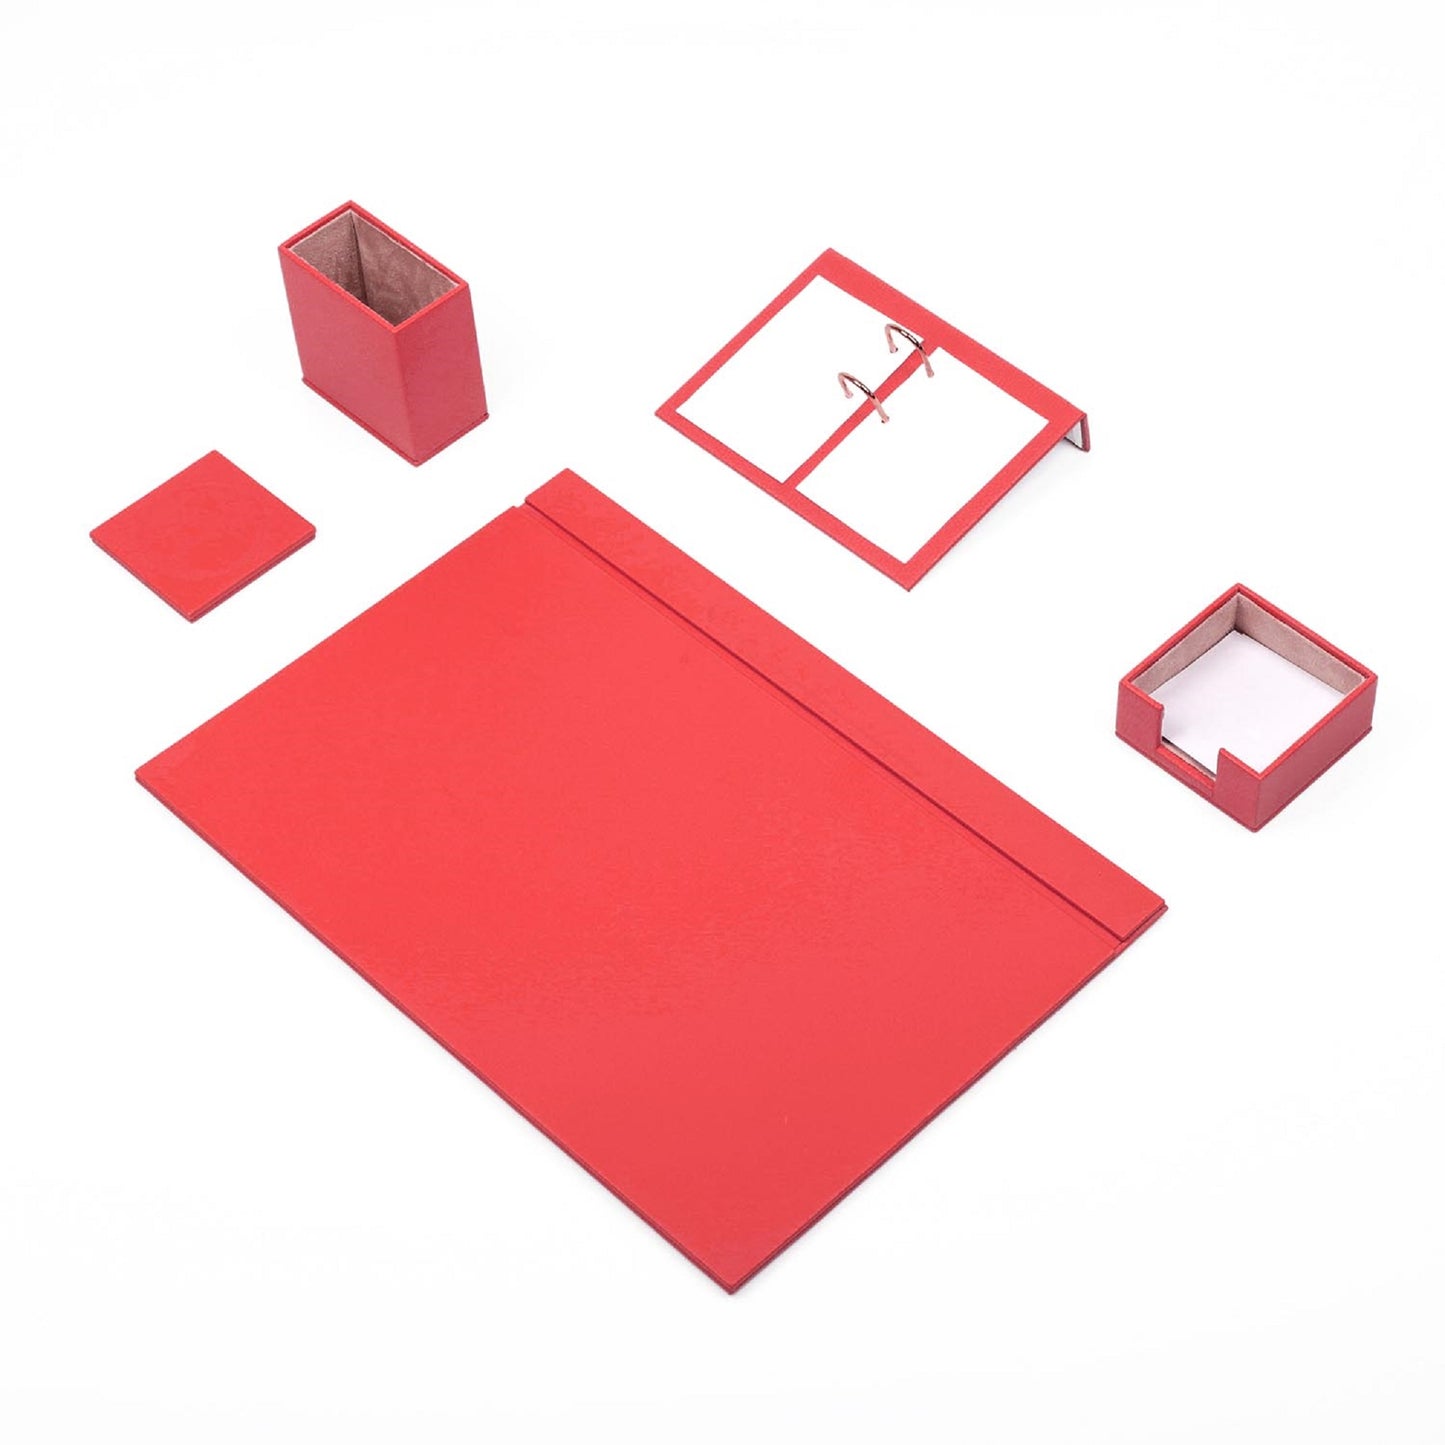 MOOG Leather Desk Set - Office Desk Organizer - Desk Storage - Leather Coaster - Desk accessories -  5 PCS